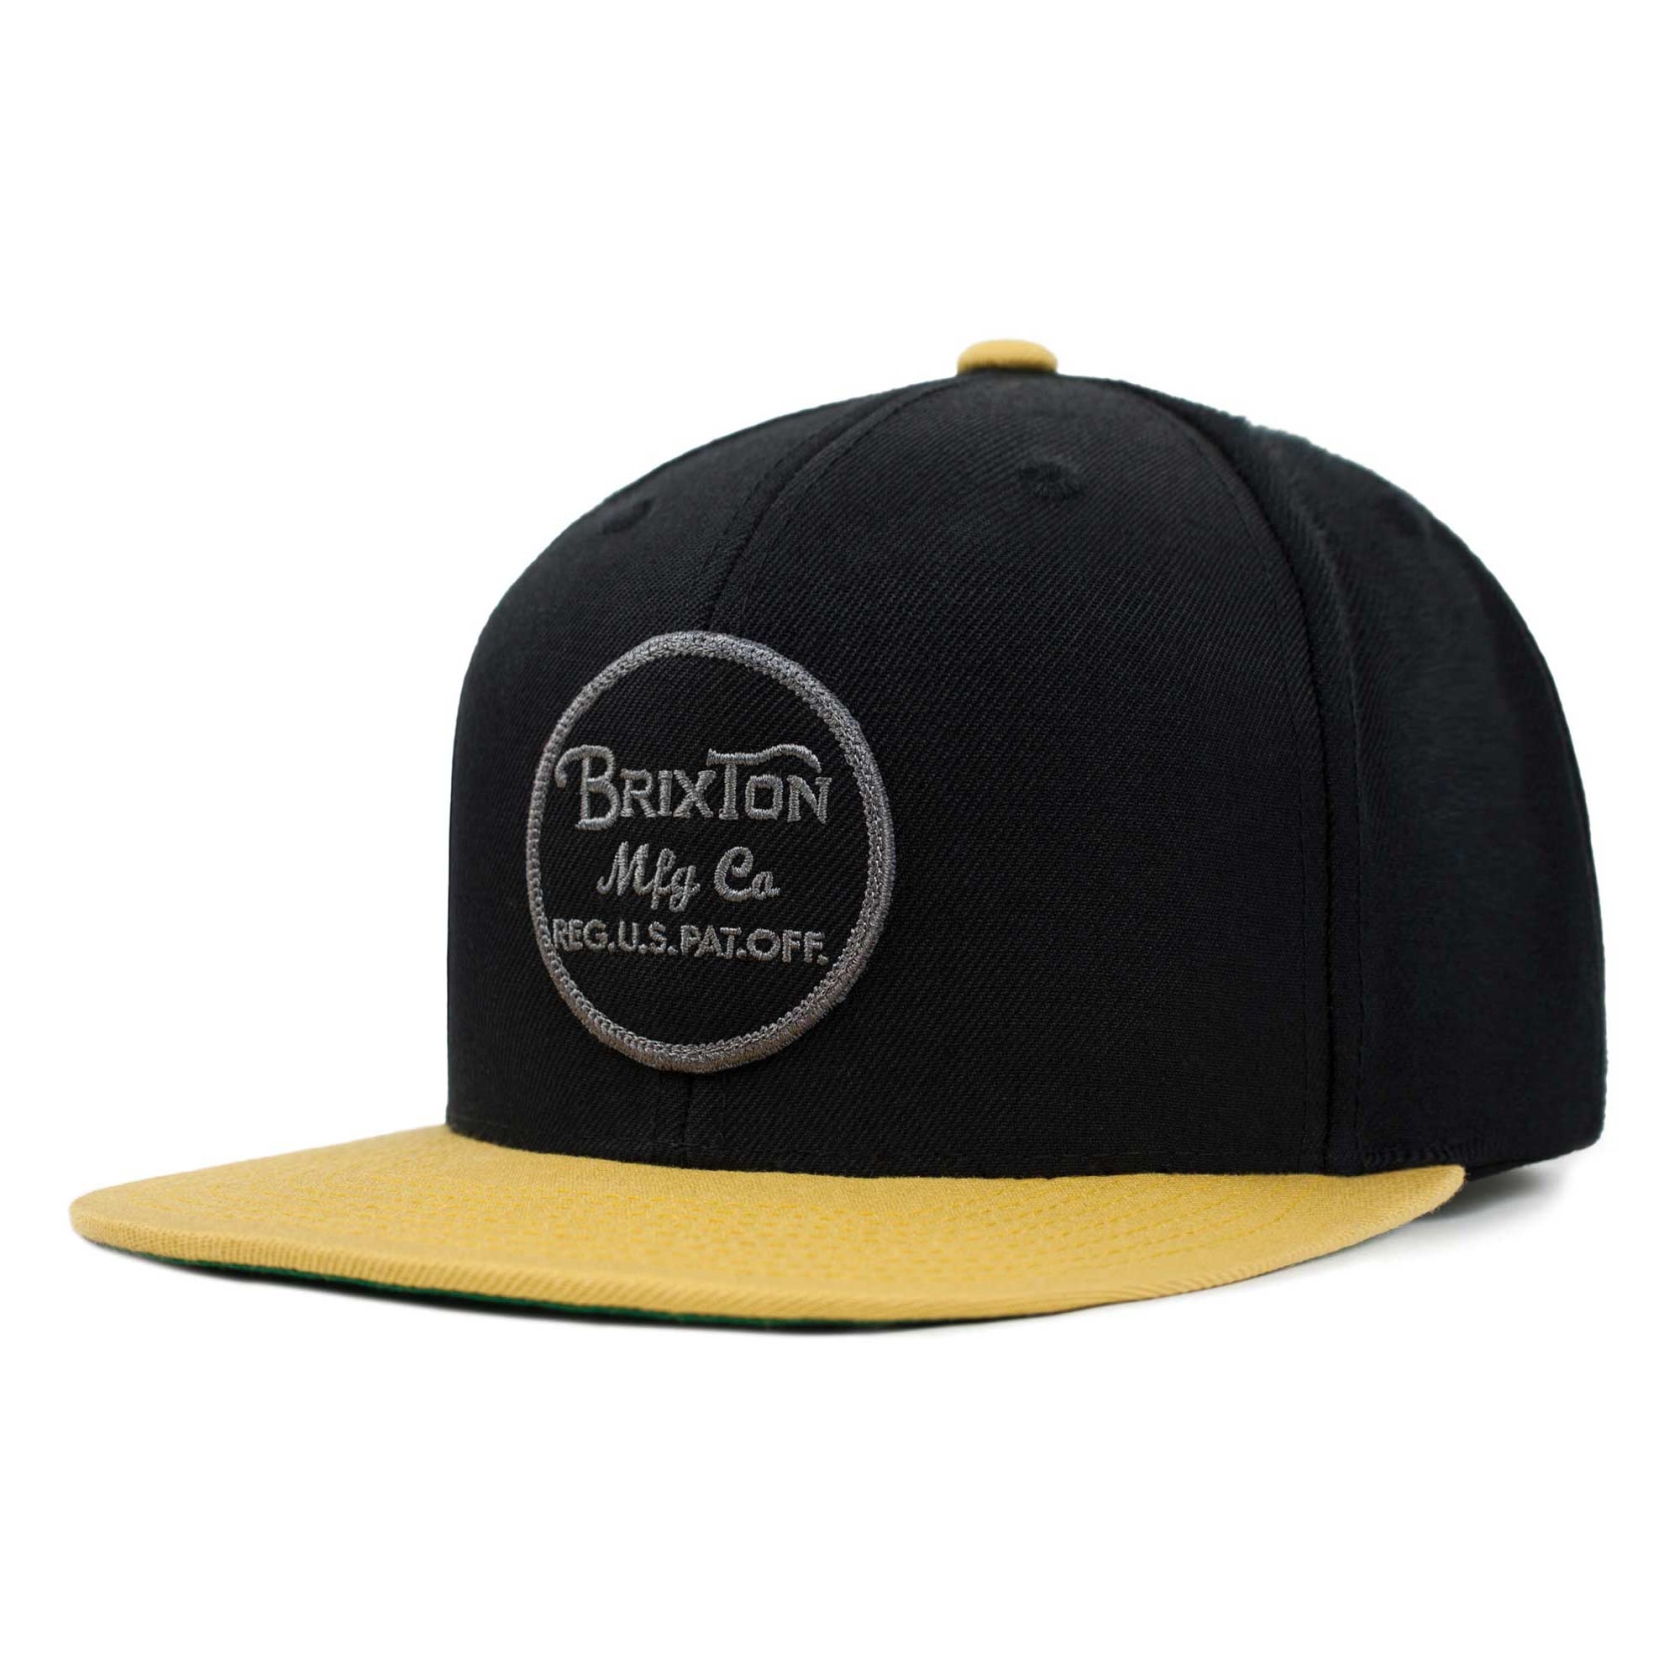 BRIXTON Cap WHEELER Snapback, black/gold